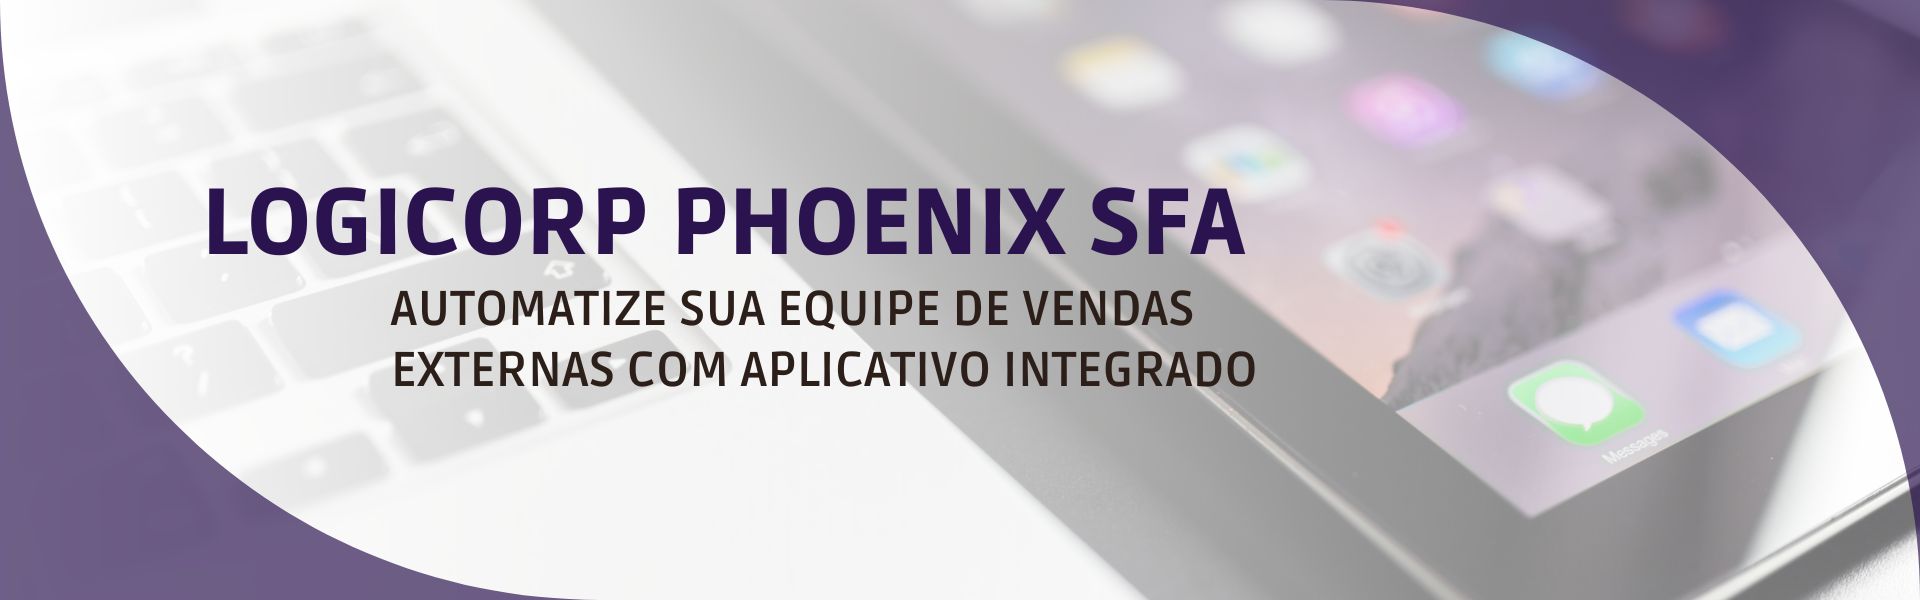 Logicorp Phoenix SFA